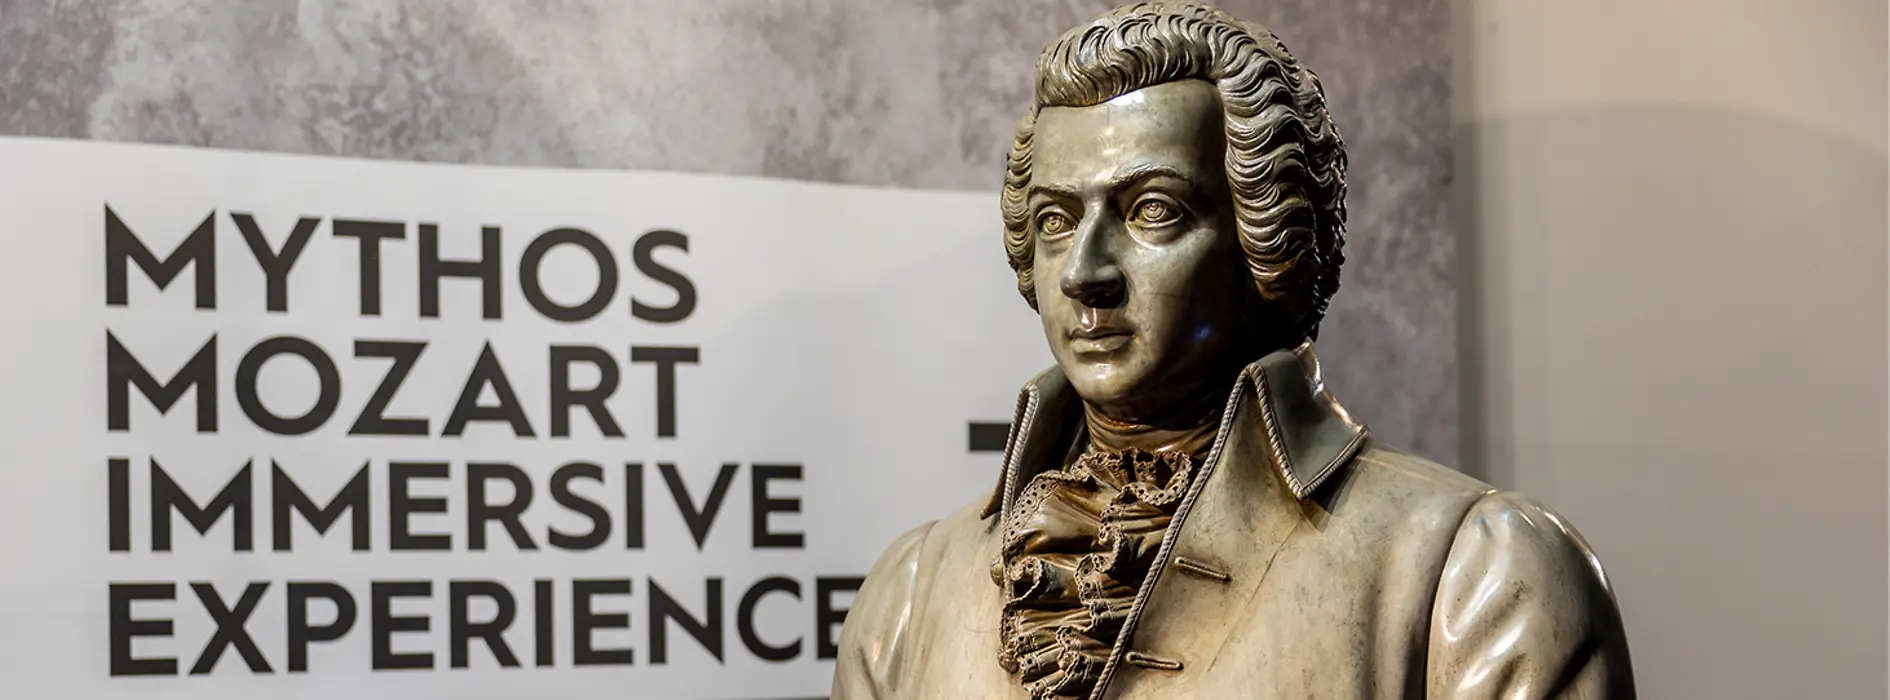 Mythos Mozart - busta